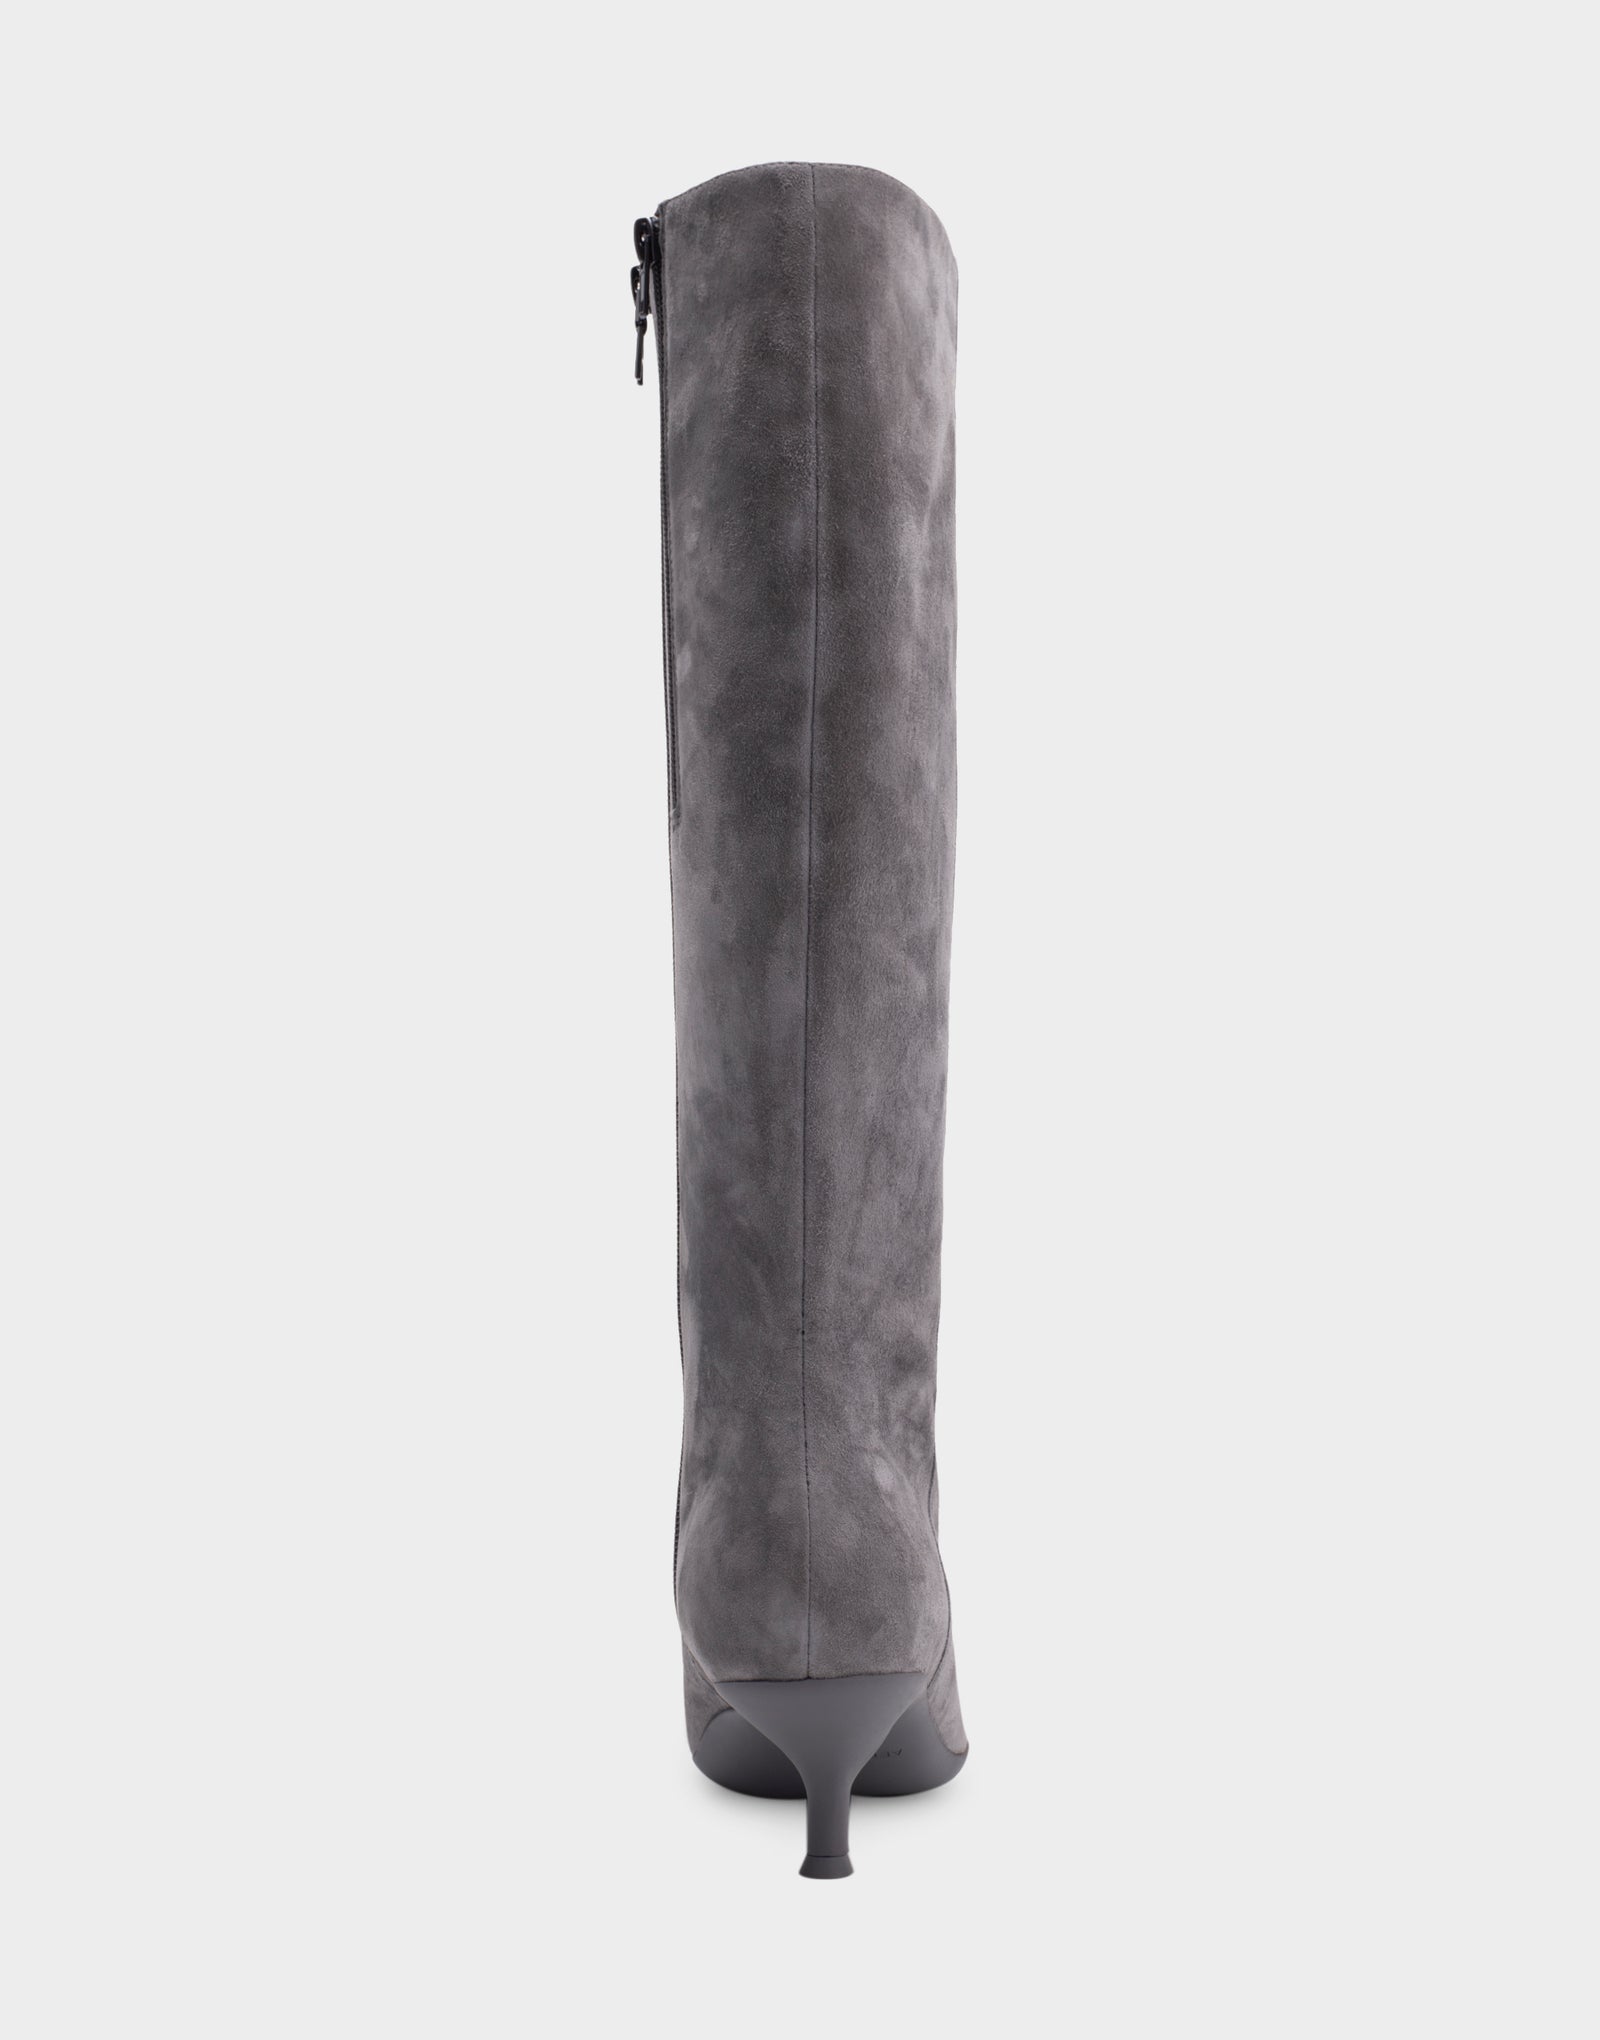 Women's Kitten Heel Tall Shaft Boot in Dark Grey